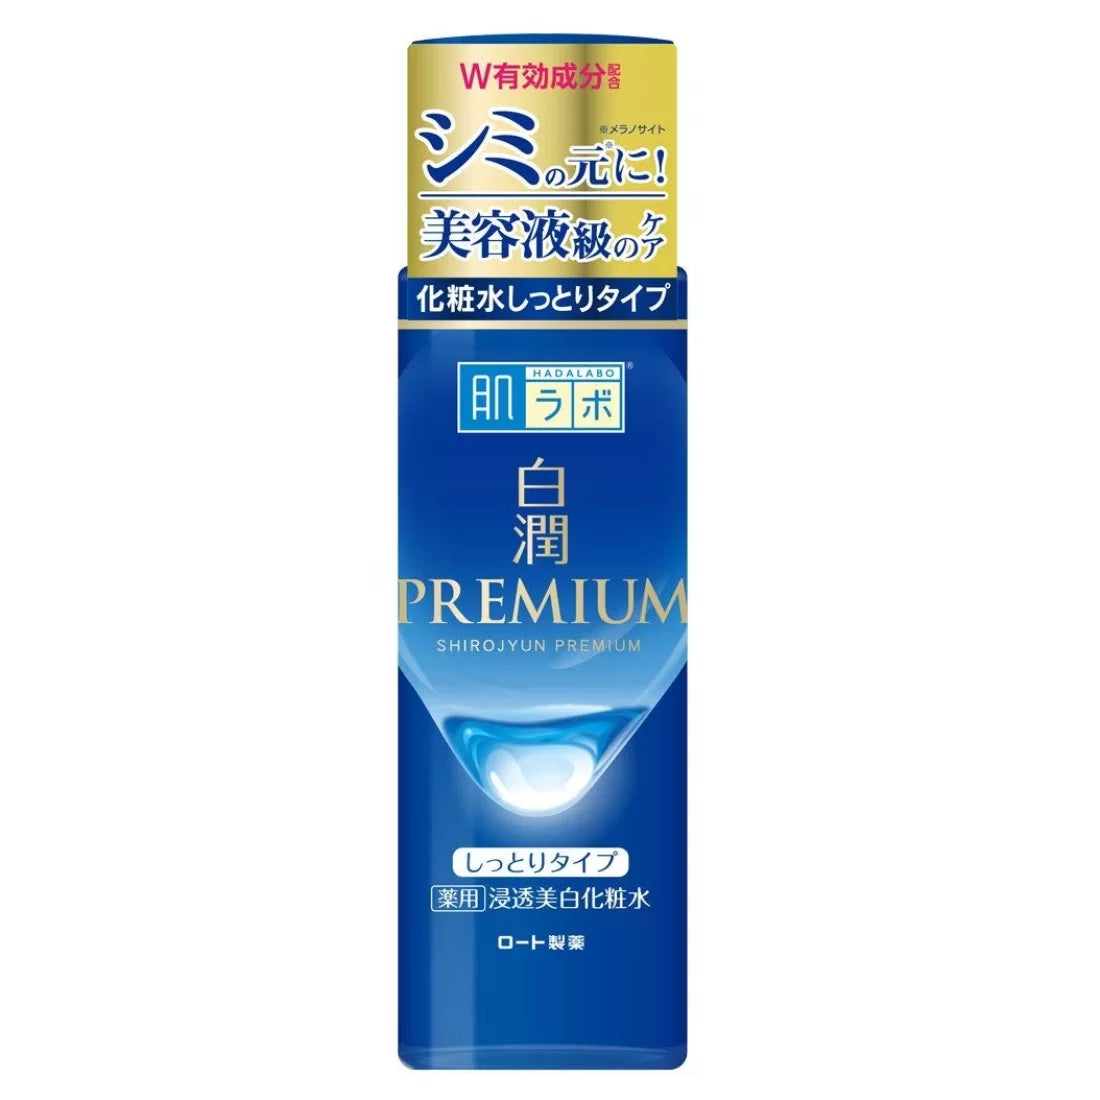 Rohto Hada Labo ShiroJyun Premium Whitening Lotion